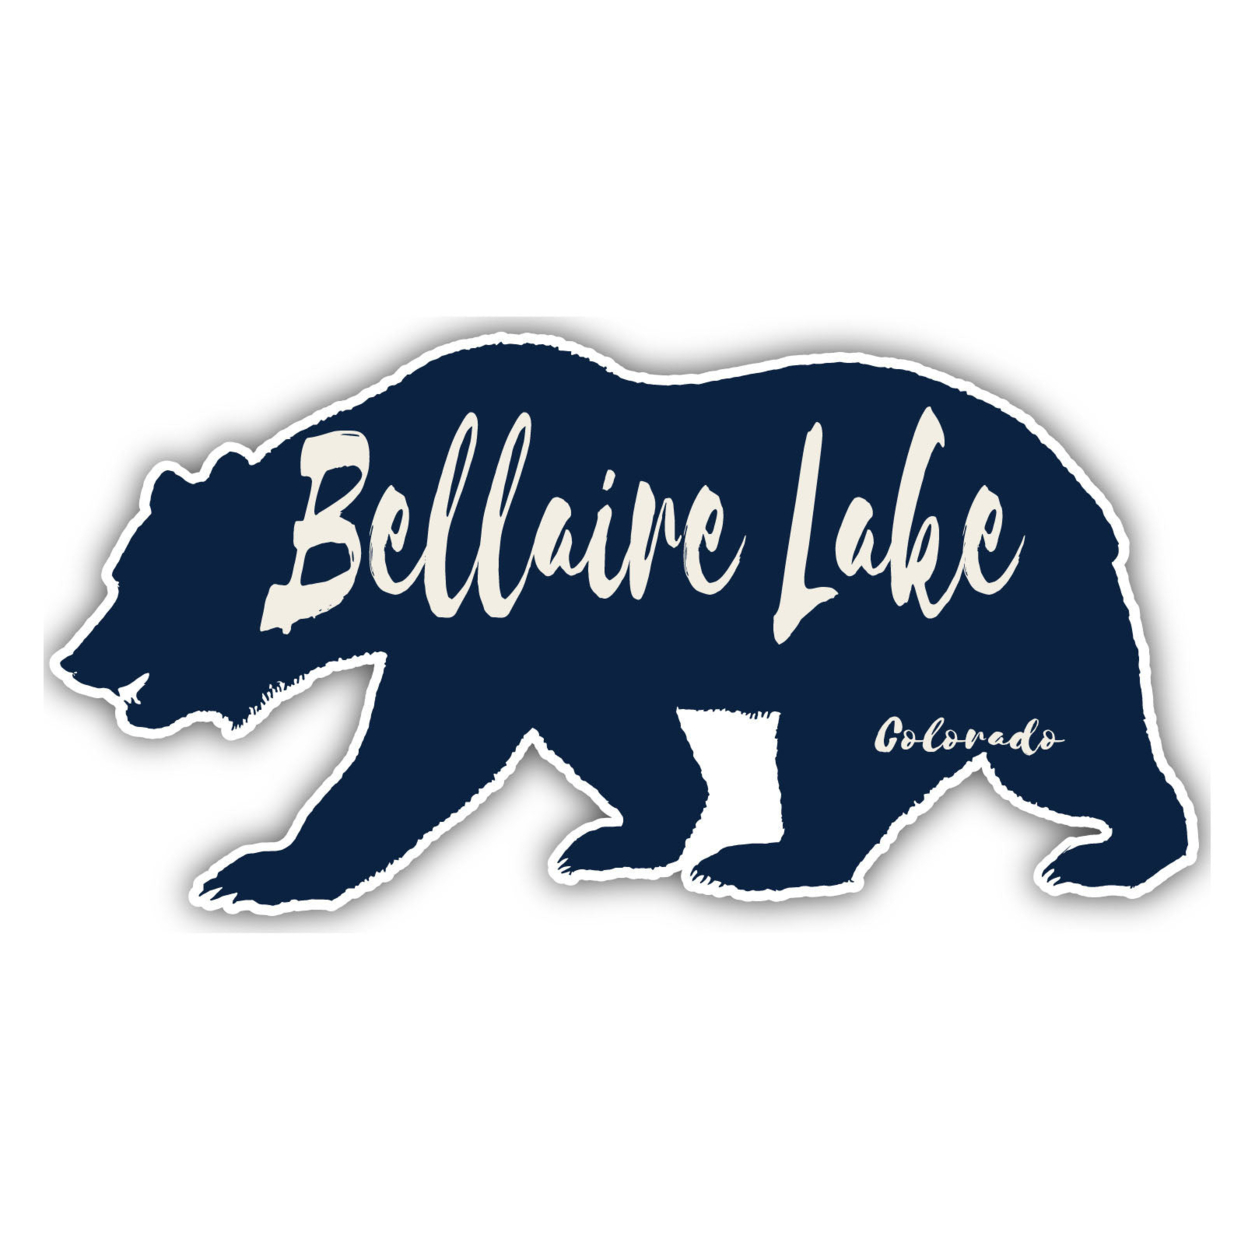 Bellaire Lake Colorado Souvenir Decorative Stickers (Choose Theme And Size) - Single Unit, 4-Inch, Bear